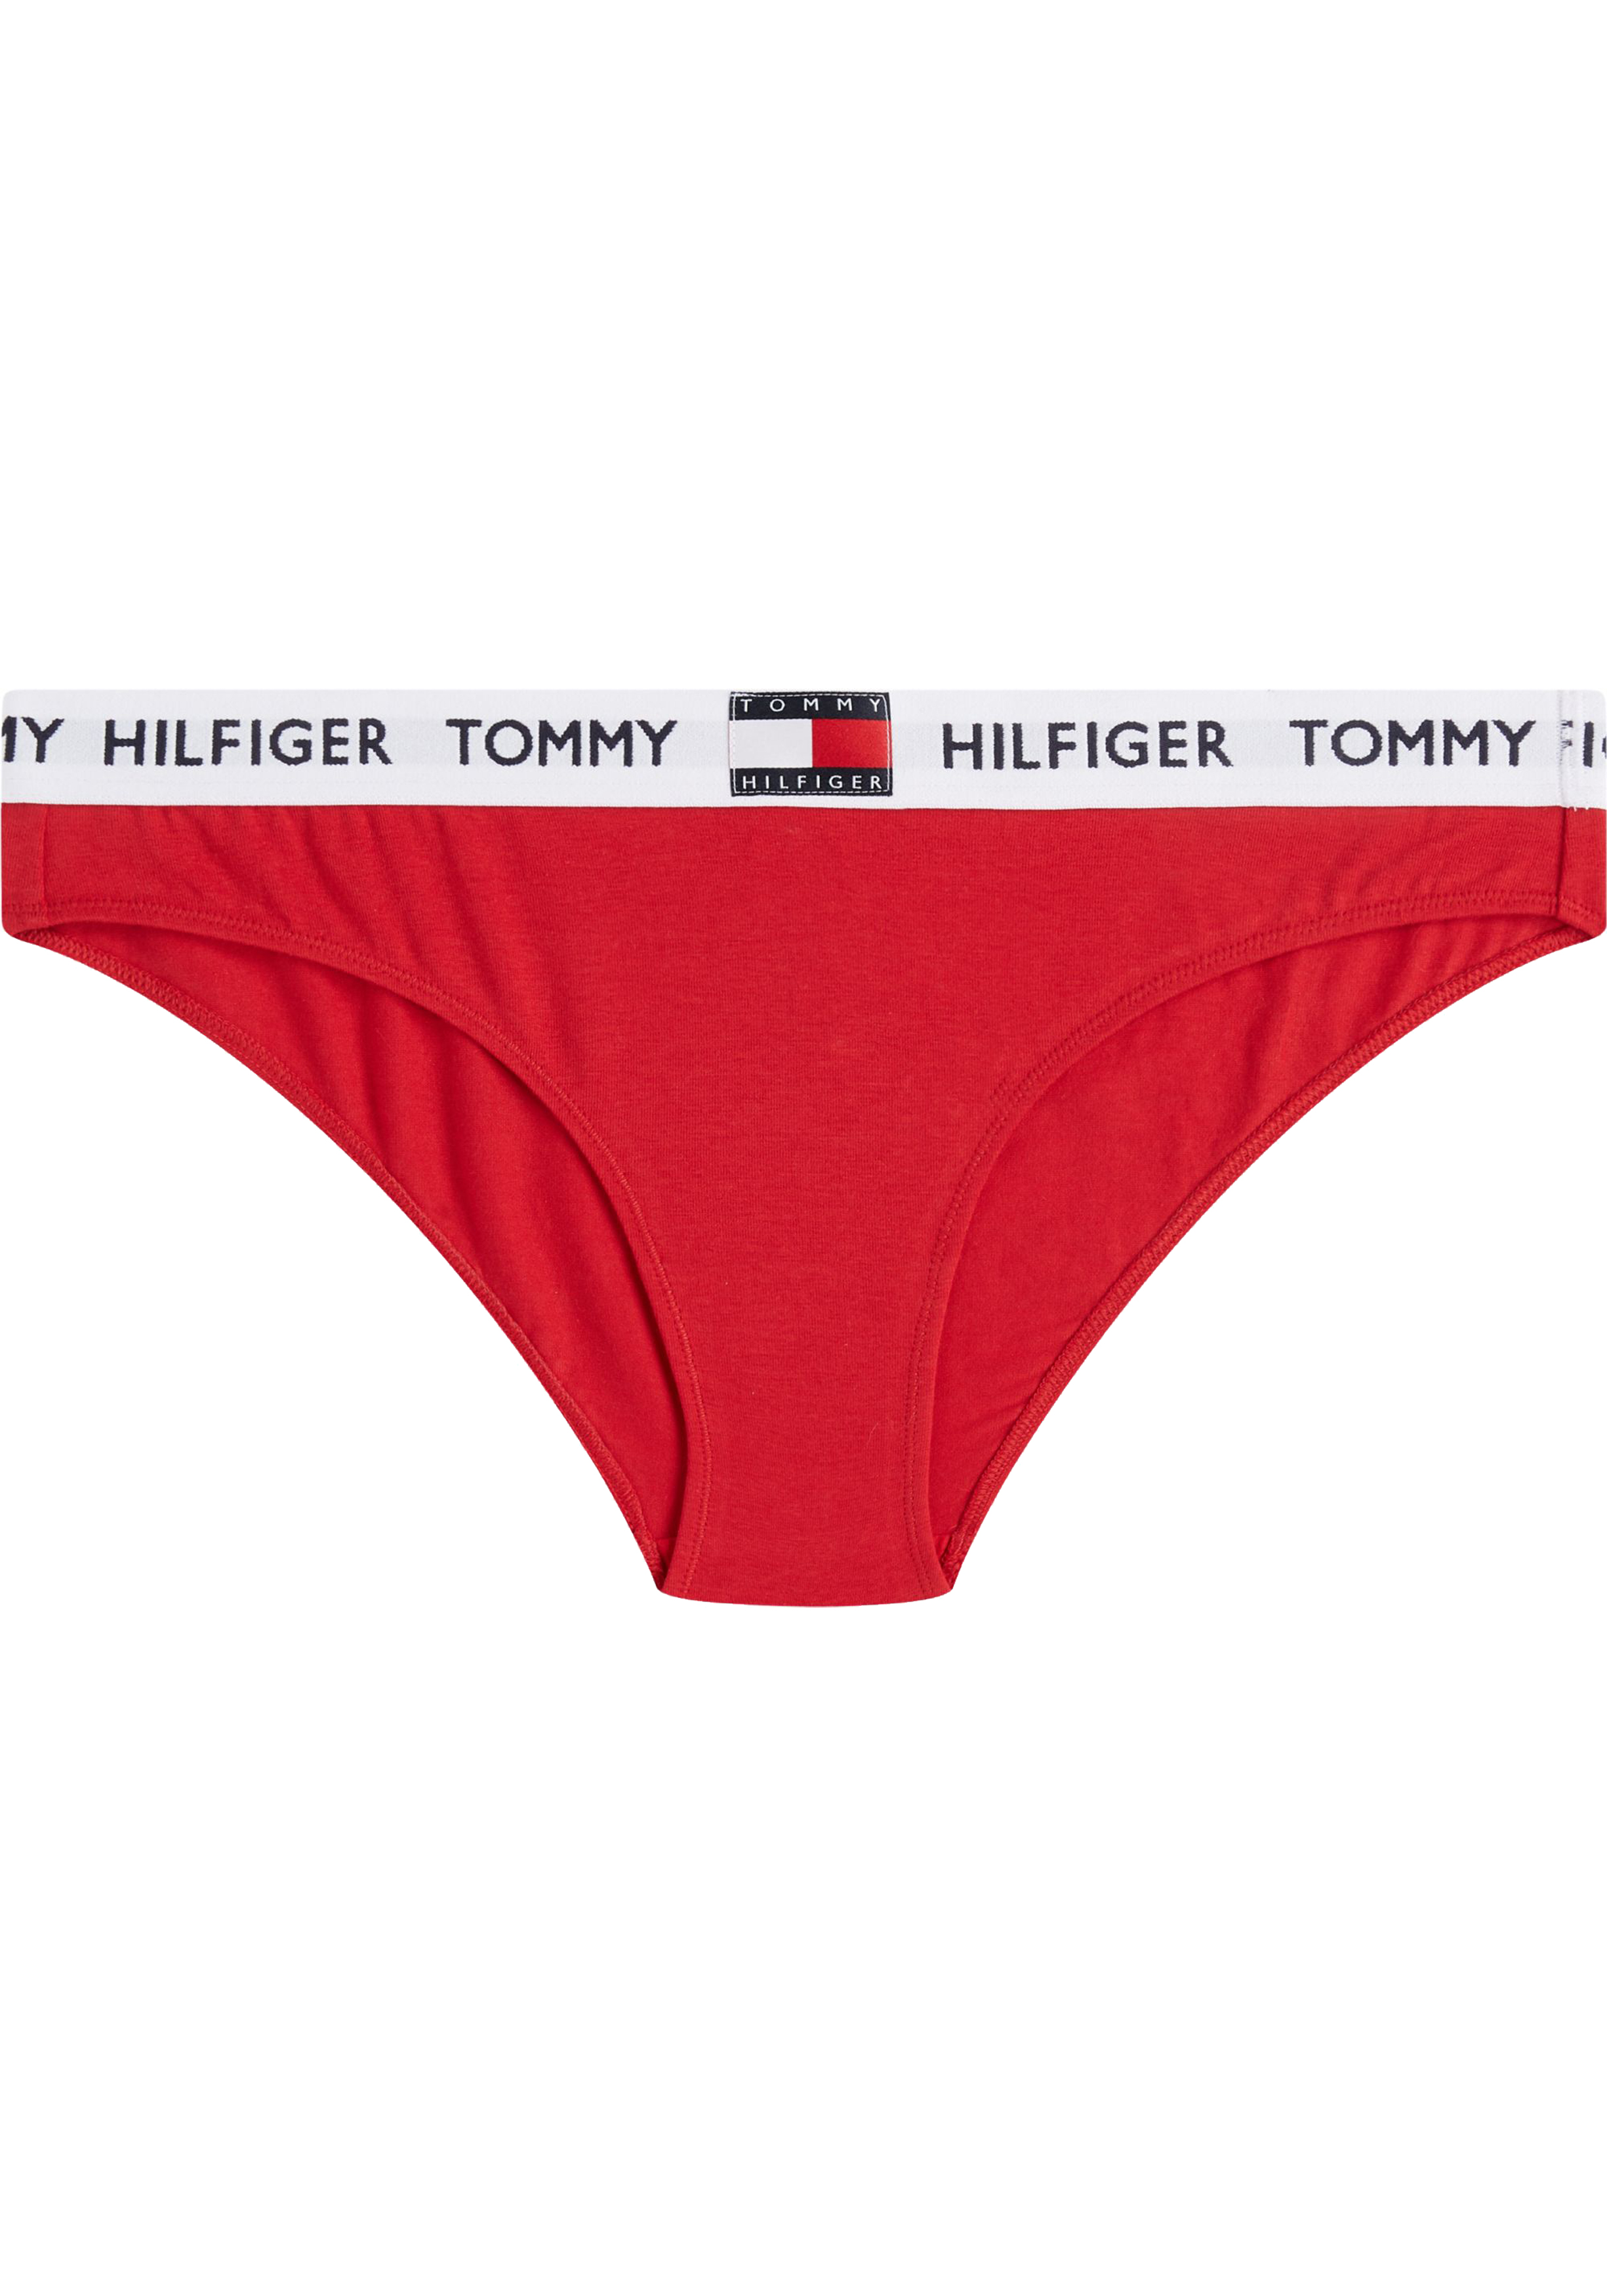 met Tommy 85 50% Hilfiger kortingen rood slip Tommy bikini tot - dames (1-pack), SALE